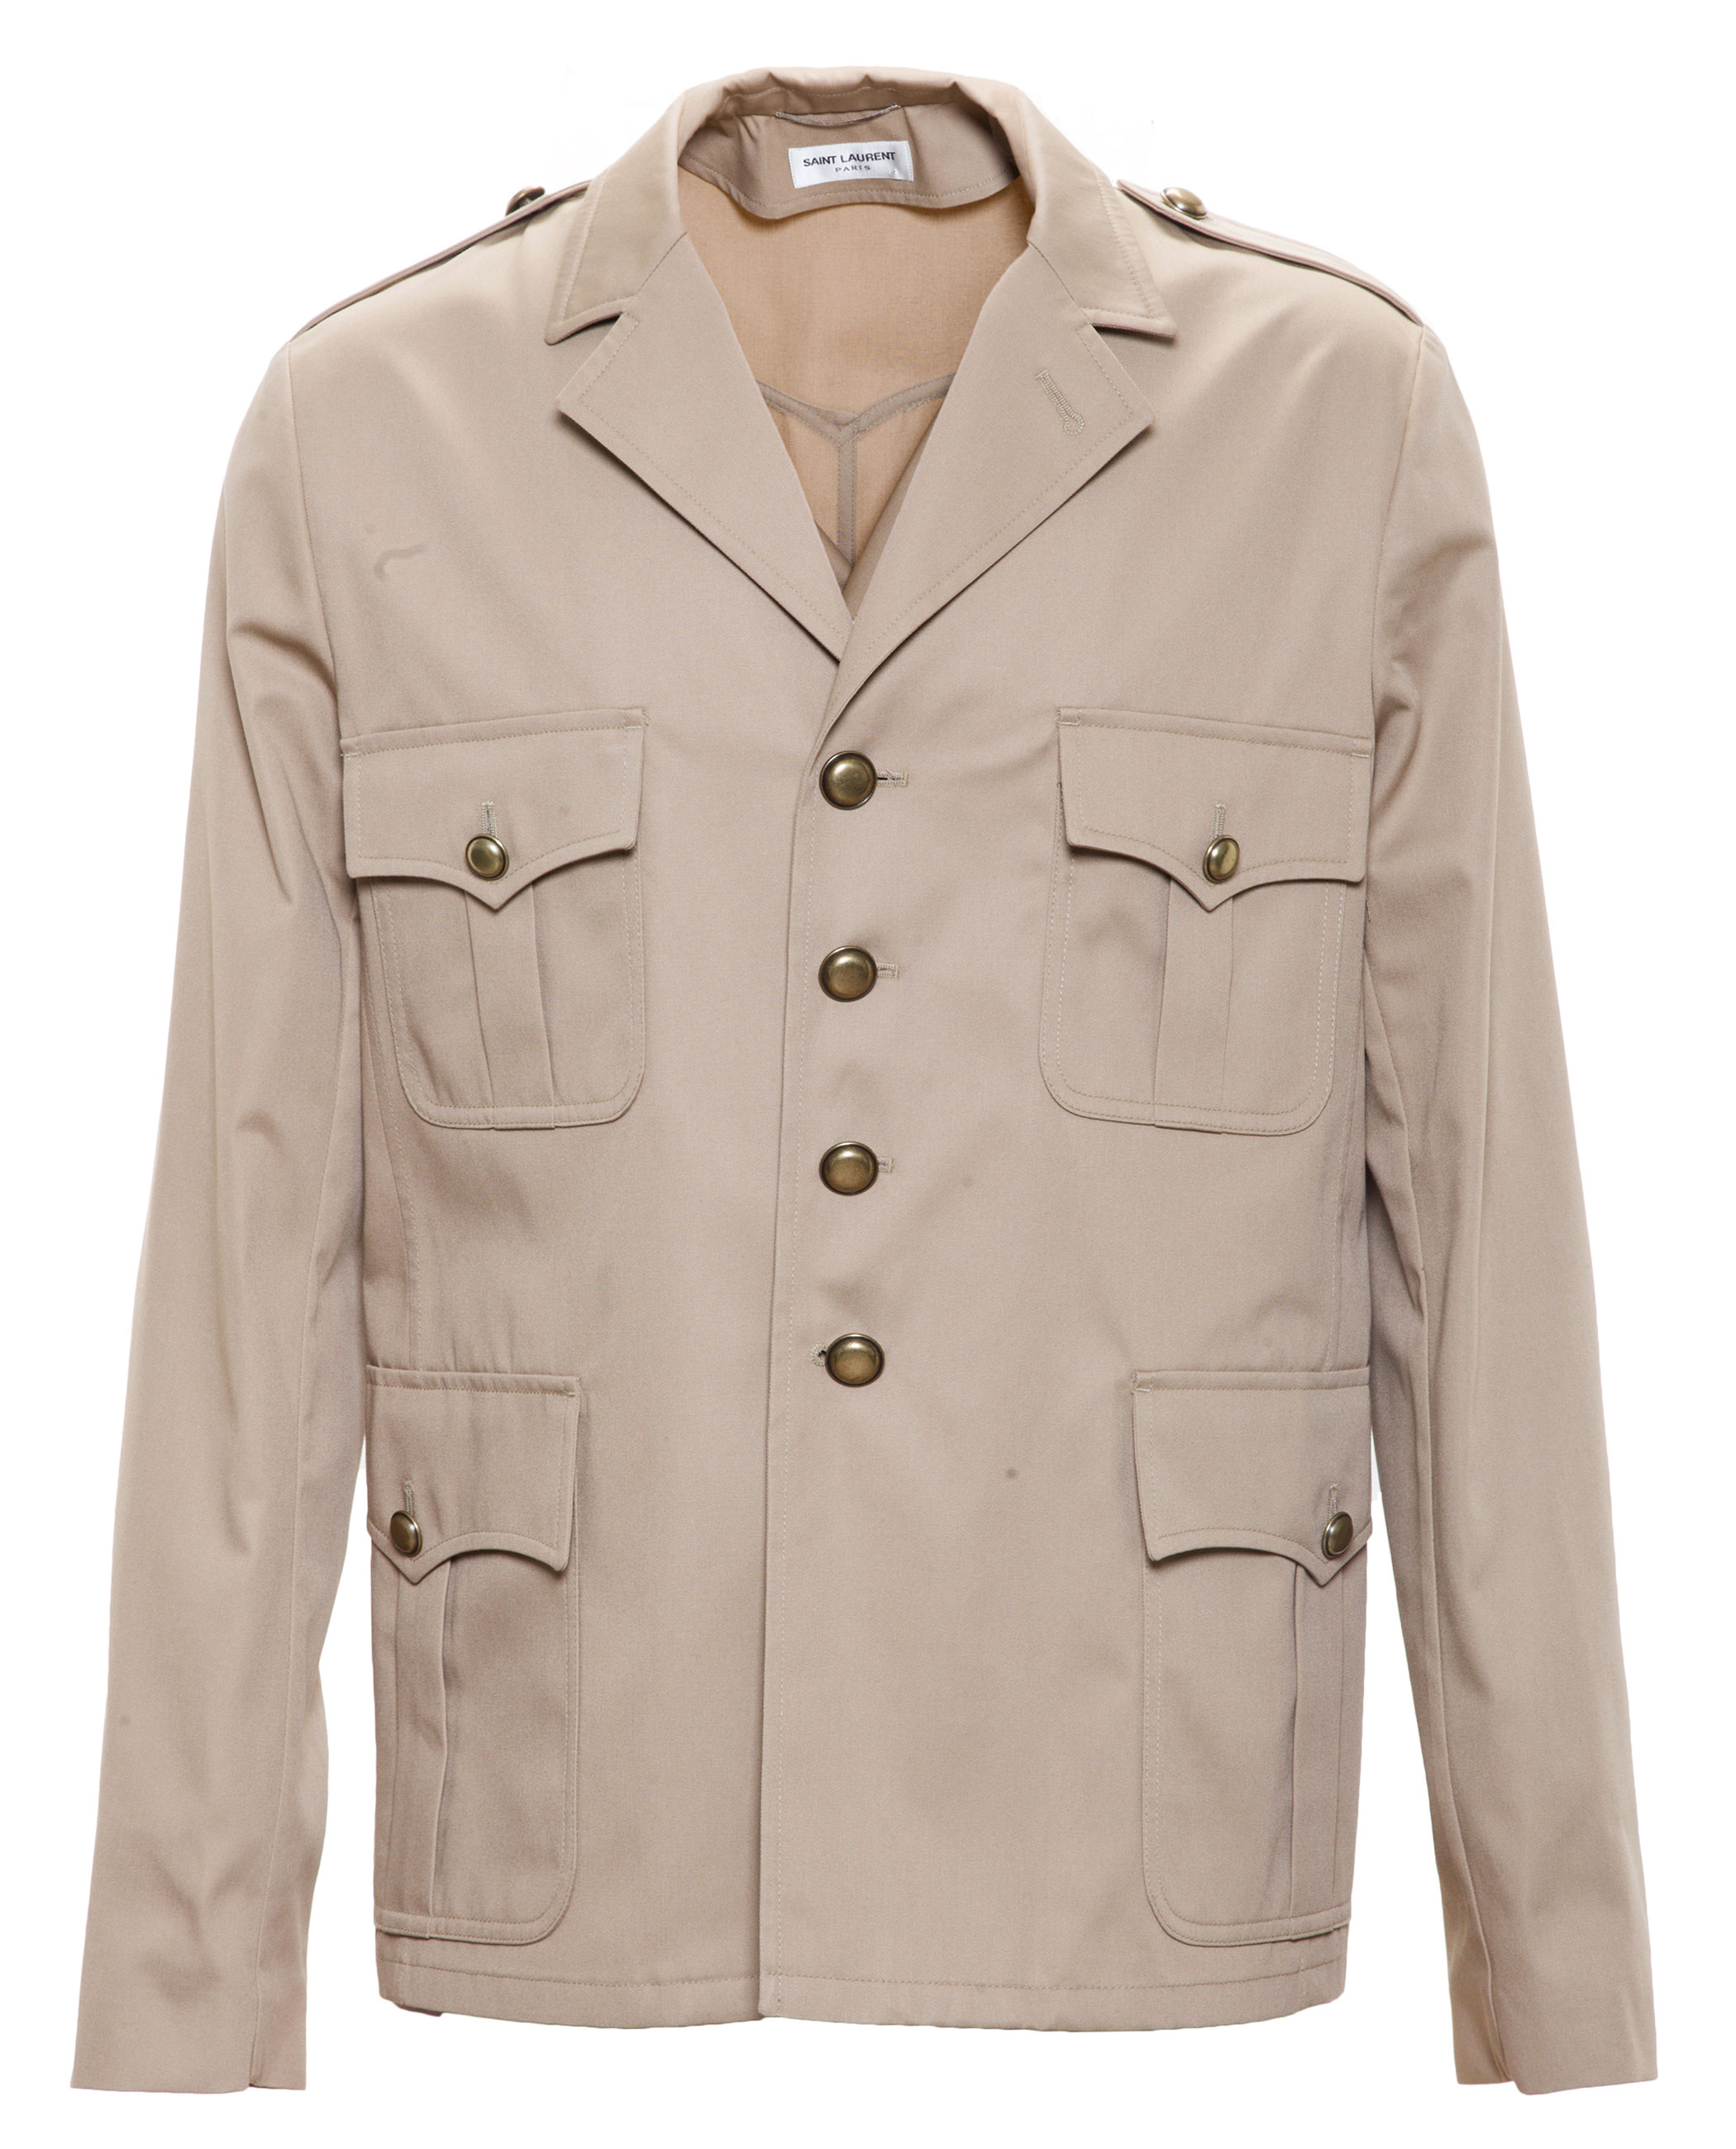 Saint Laurent Safari Jacket in Beige (Natural) for Men - Lyst